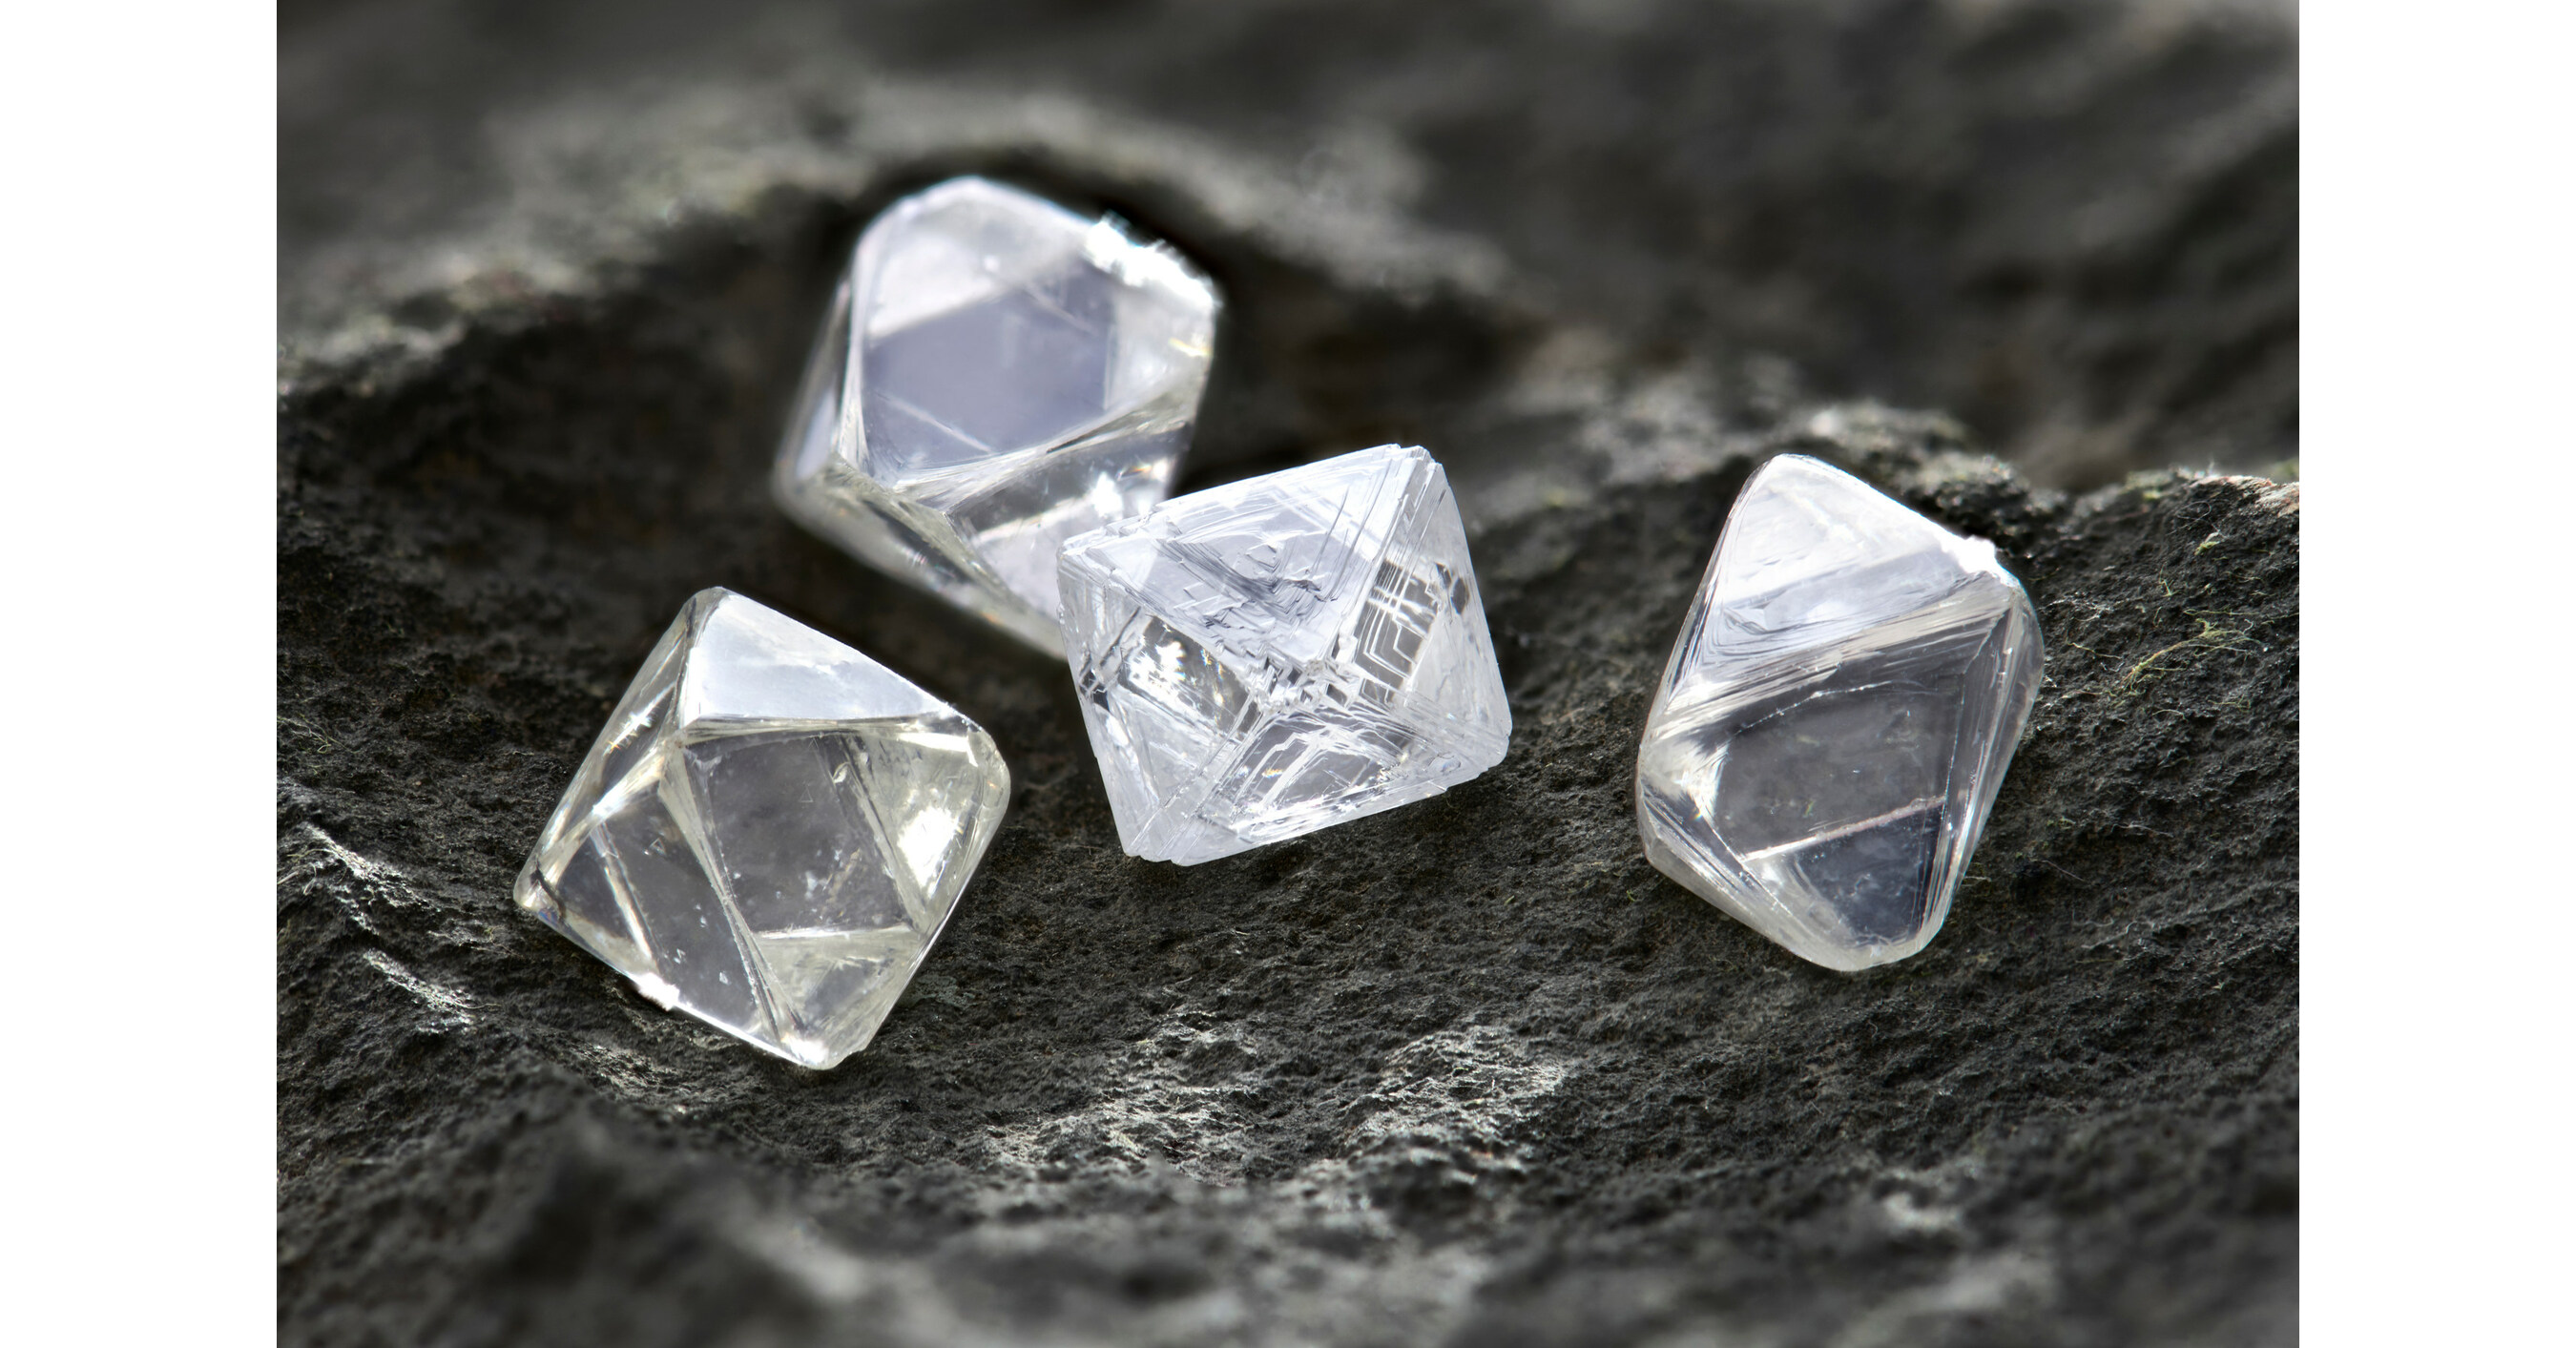 Strategic Partnership amongst NDC and Renowned Jewelry Brands to Advocate the “Natural Diamond Aspiration”